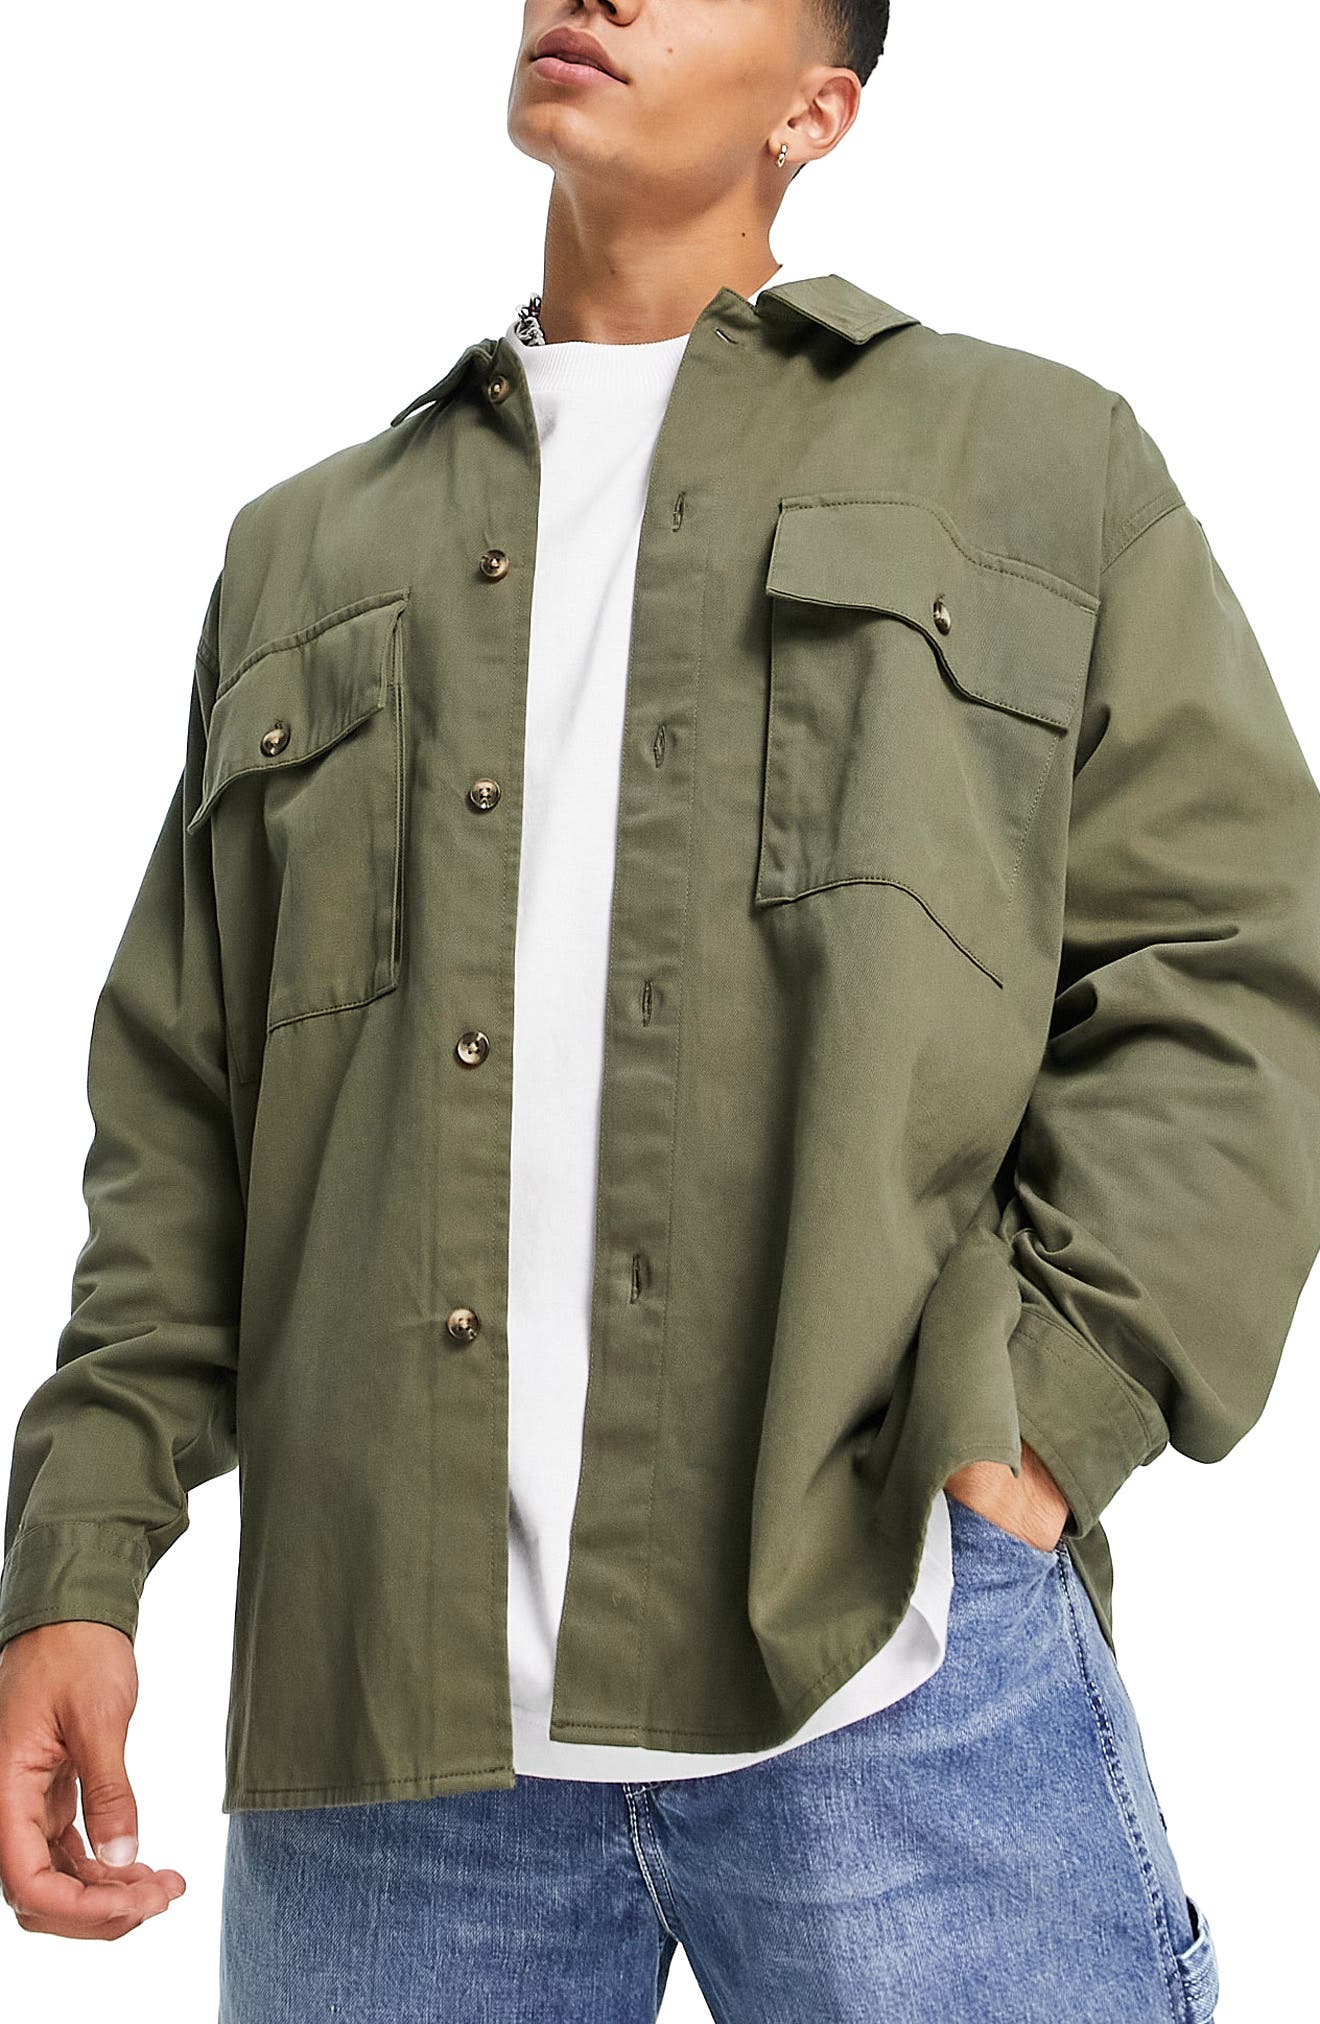 Men's Retro Check Baggy Coat Long Sleeve Cardigan 100%Cotton Outwear Tops Jacket